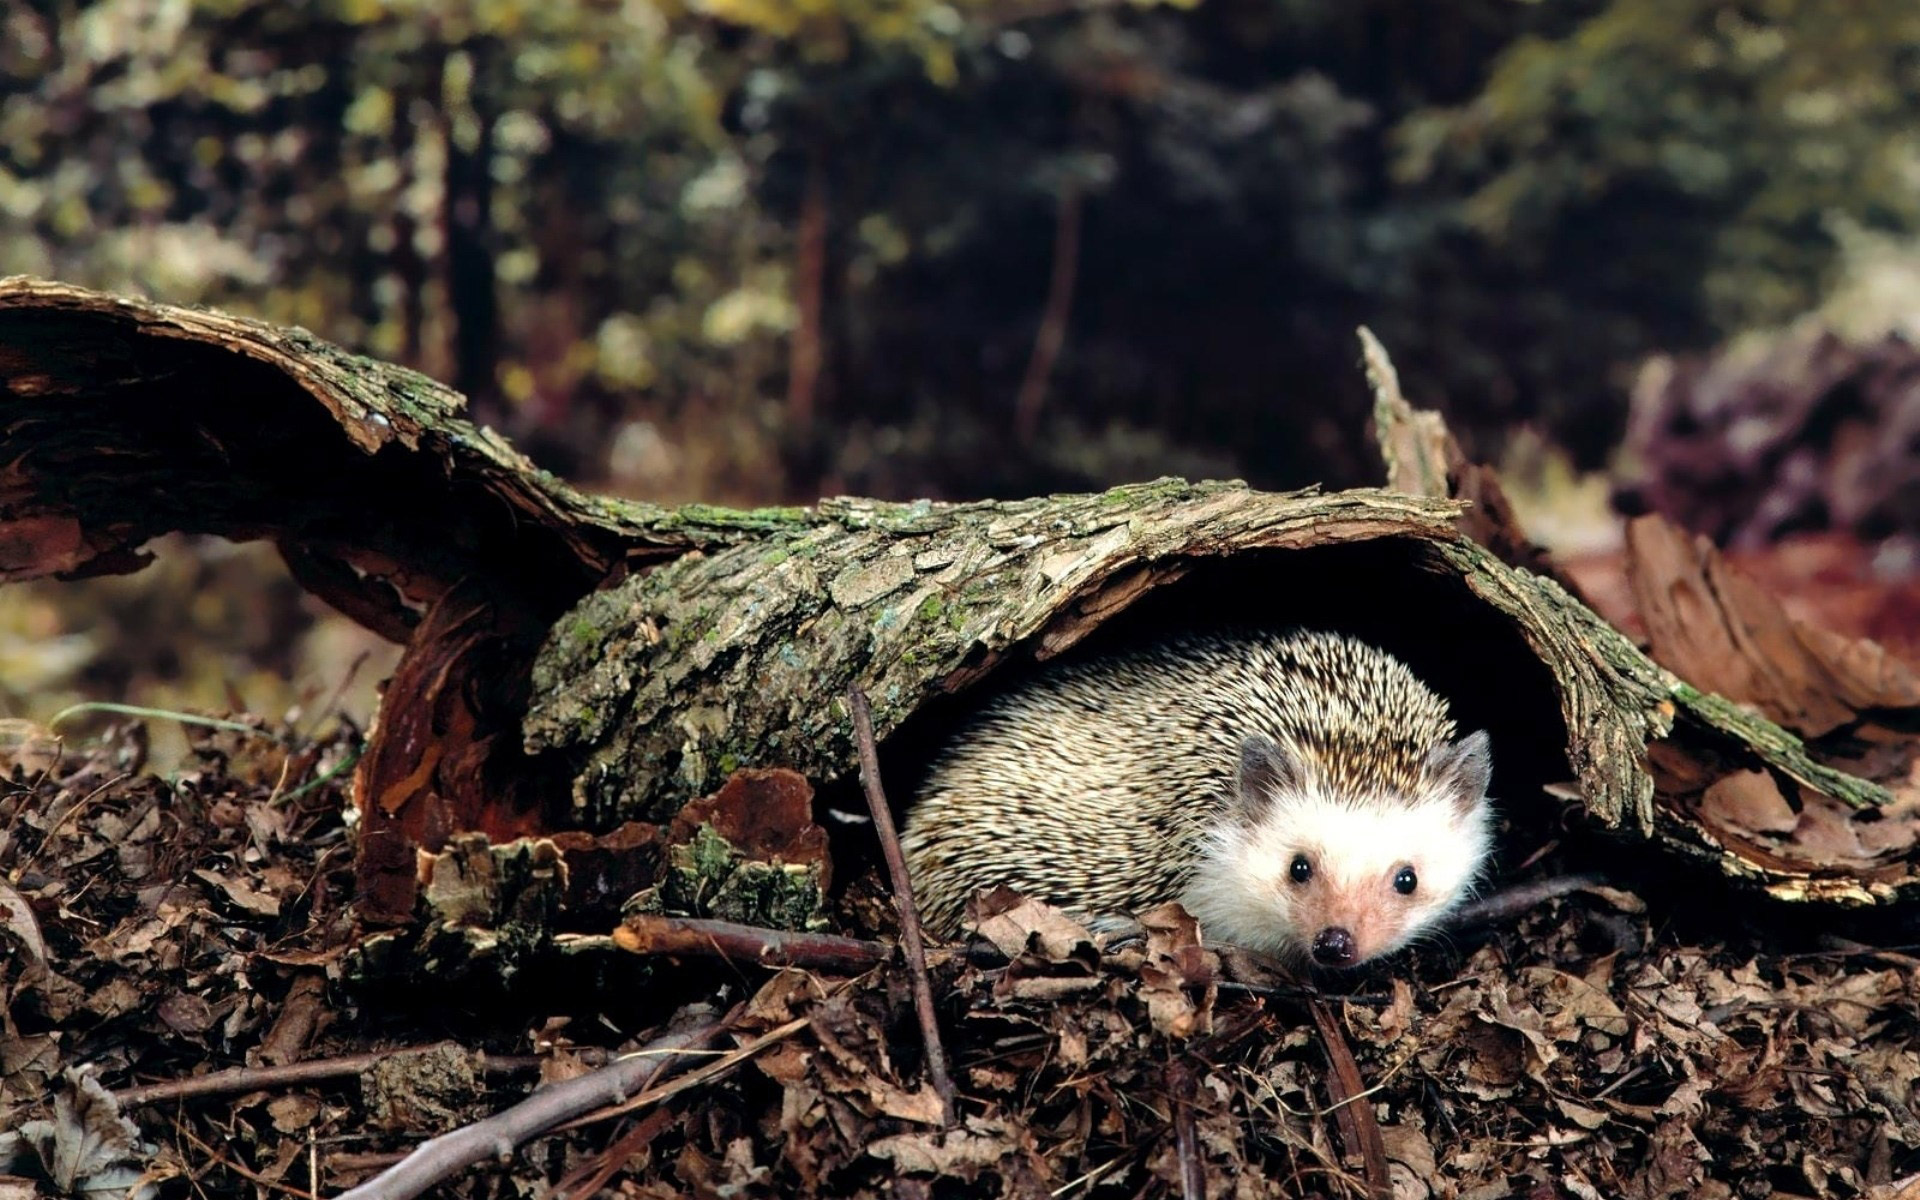 Hedgehog hiding behind tree bark | wallpapers55.com - Best ...